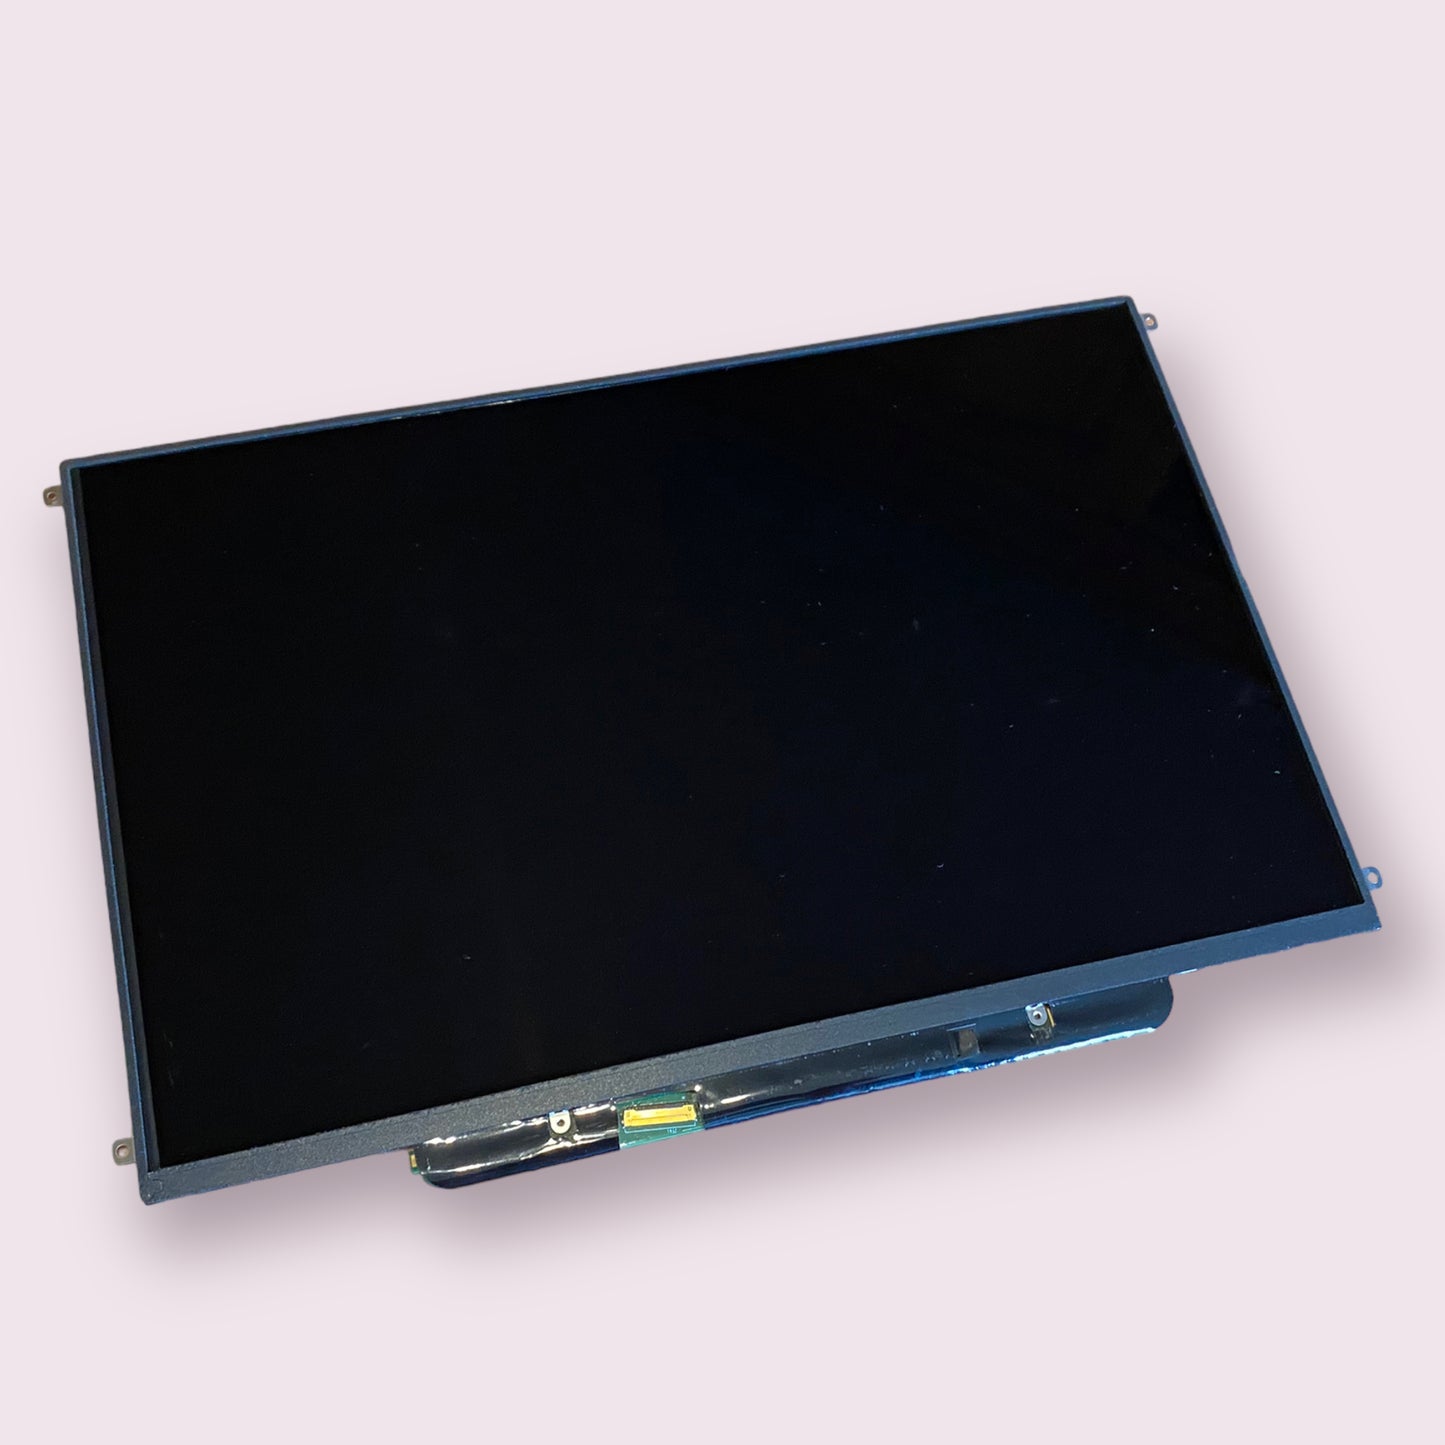 MacBook Pro A1278 13" LCD Display Screen Panel B133EW07 H/W:0A F/W:0 - Genuine Pull Part